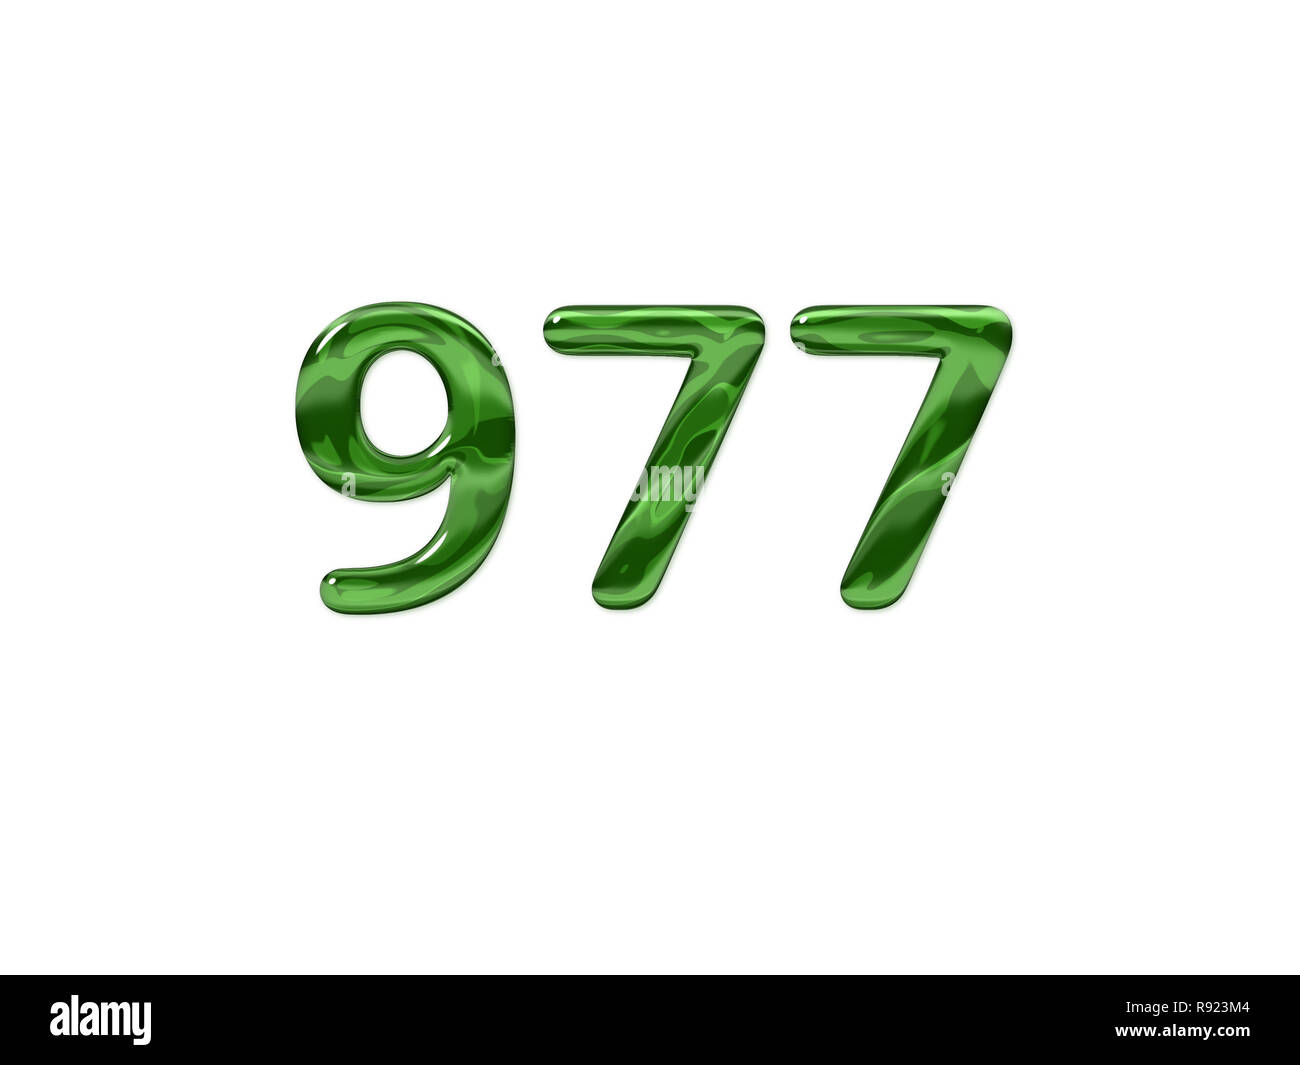 Números en imagen - Página 10 Green-number-977-isolated-white-background-R923M4